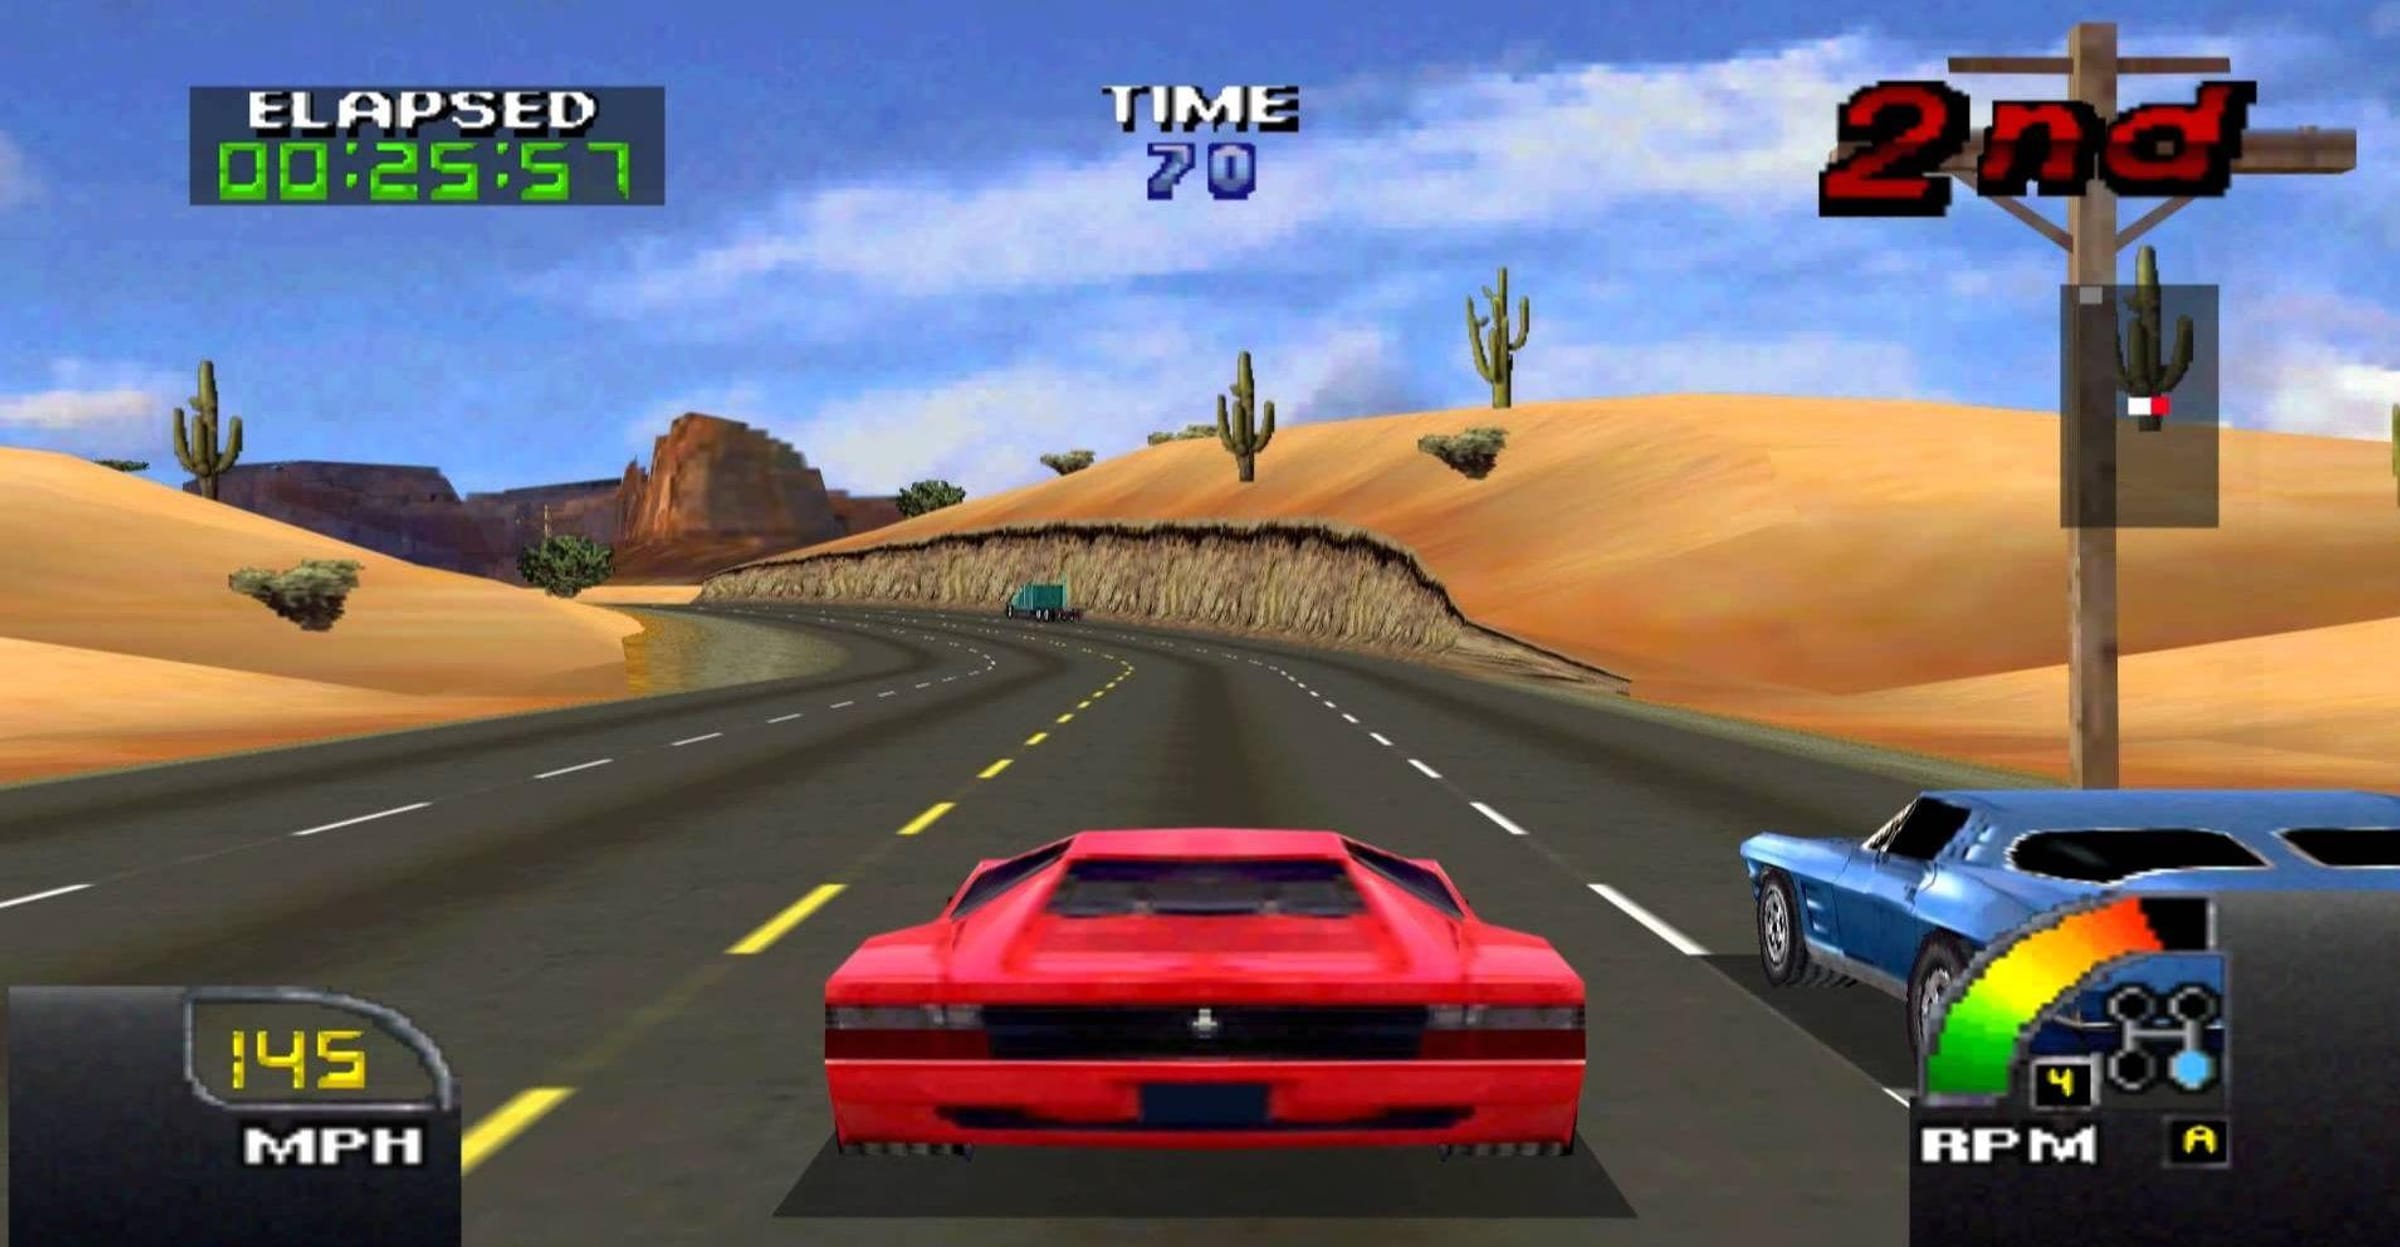 Indoor Video Dynamic Car Arcade Game Machine Driving Racing